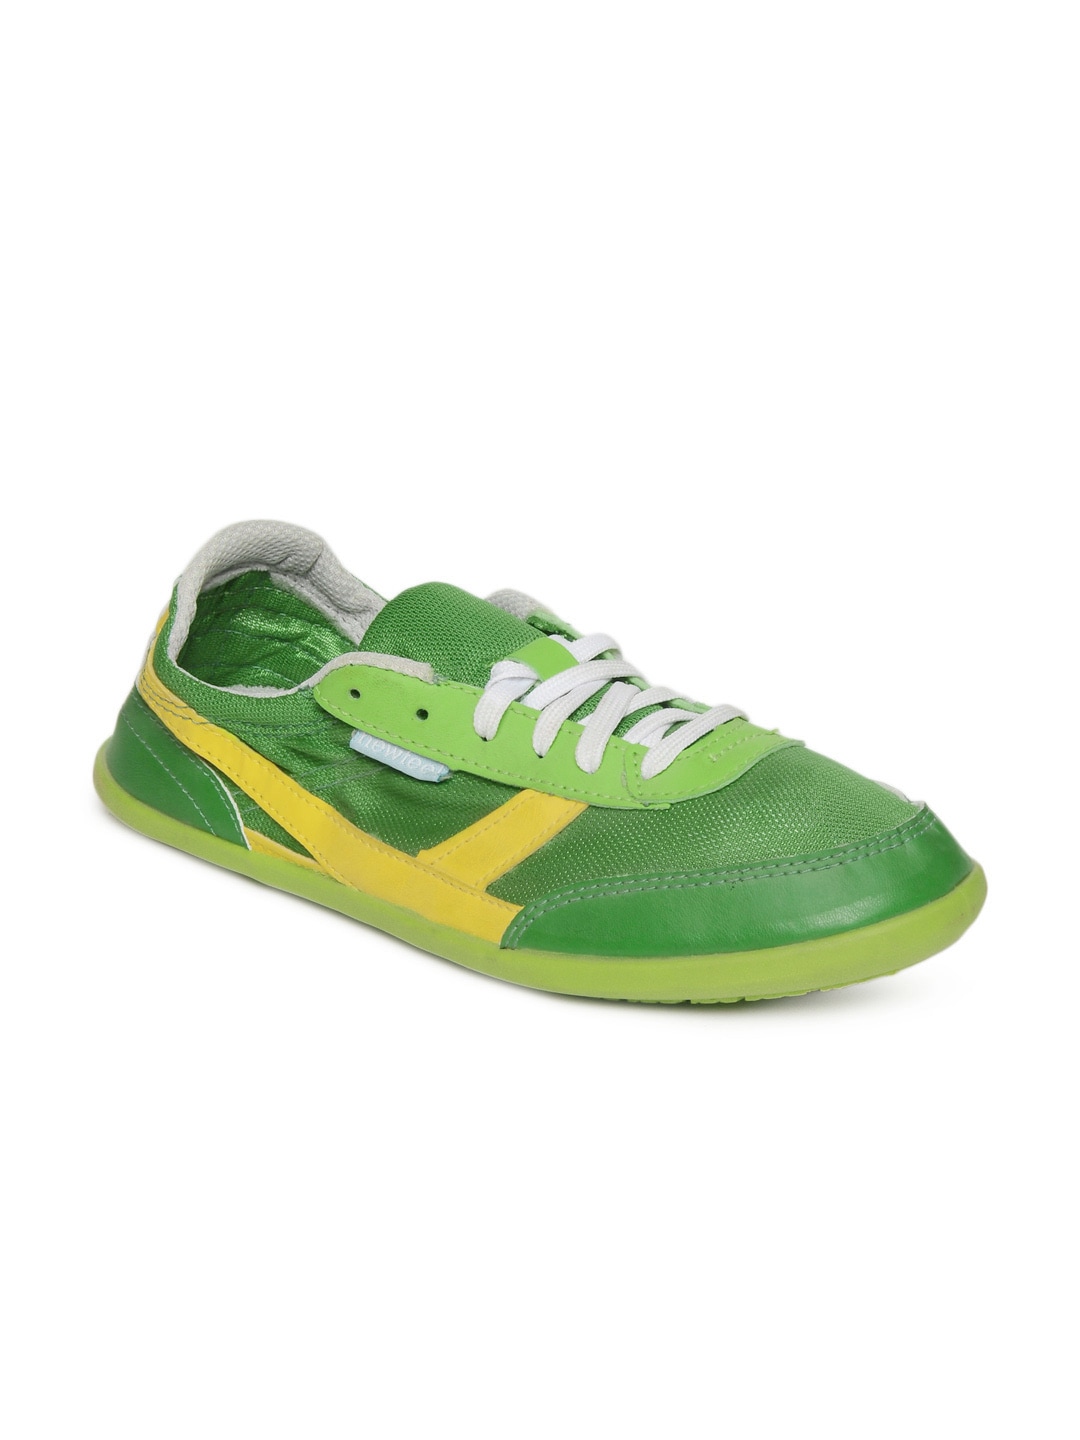 Newfeel Unisex Green Sports Shoes